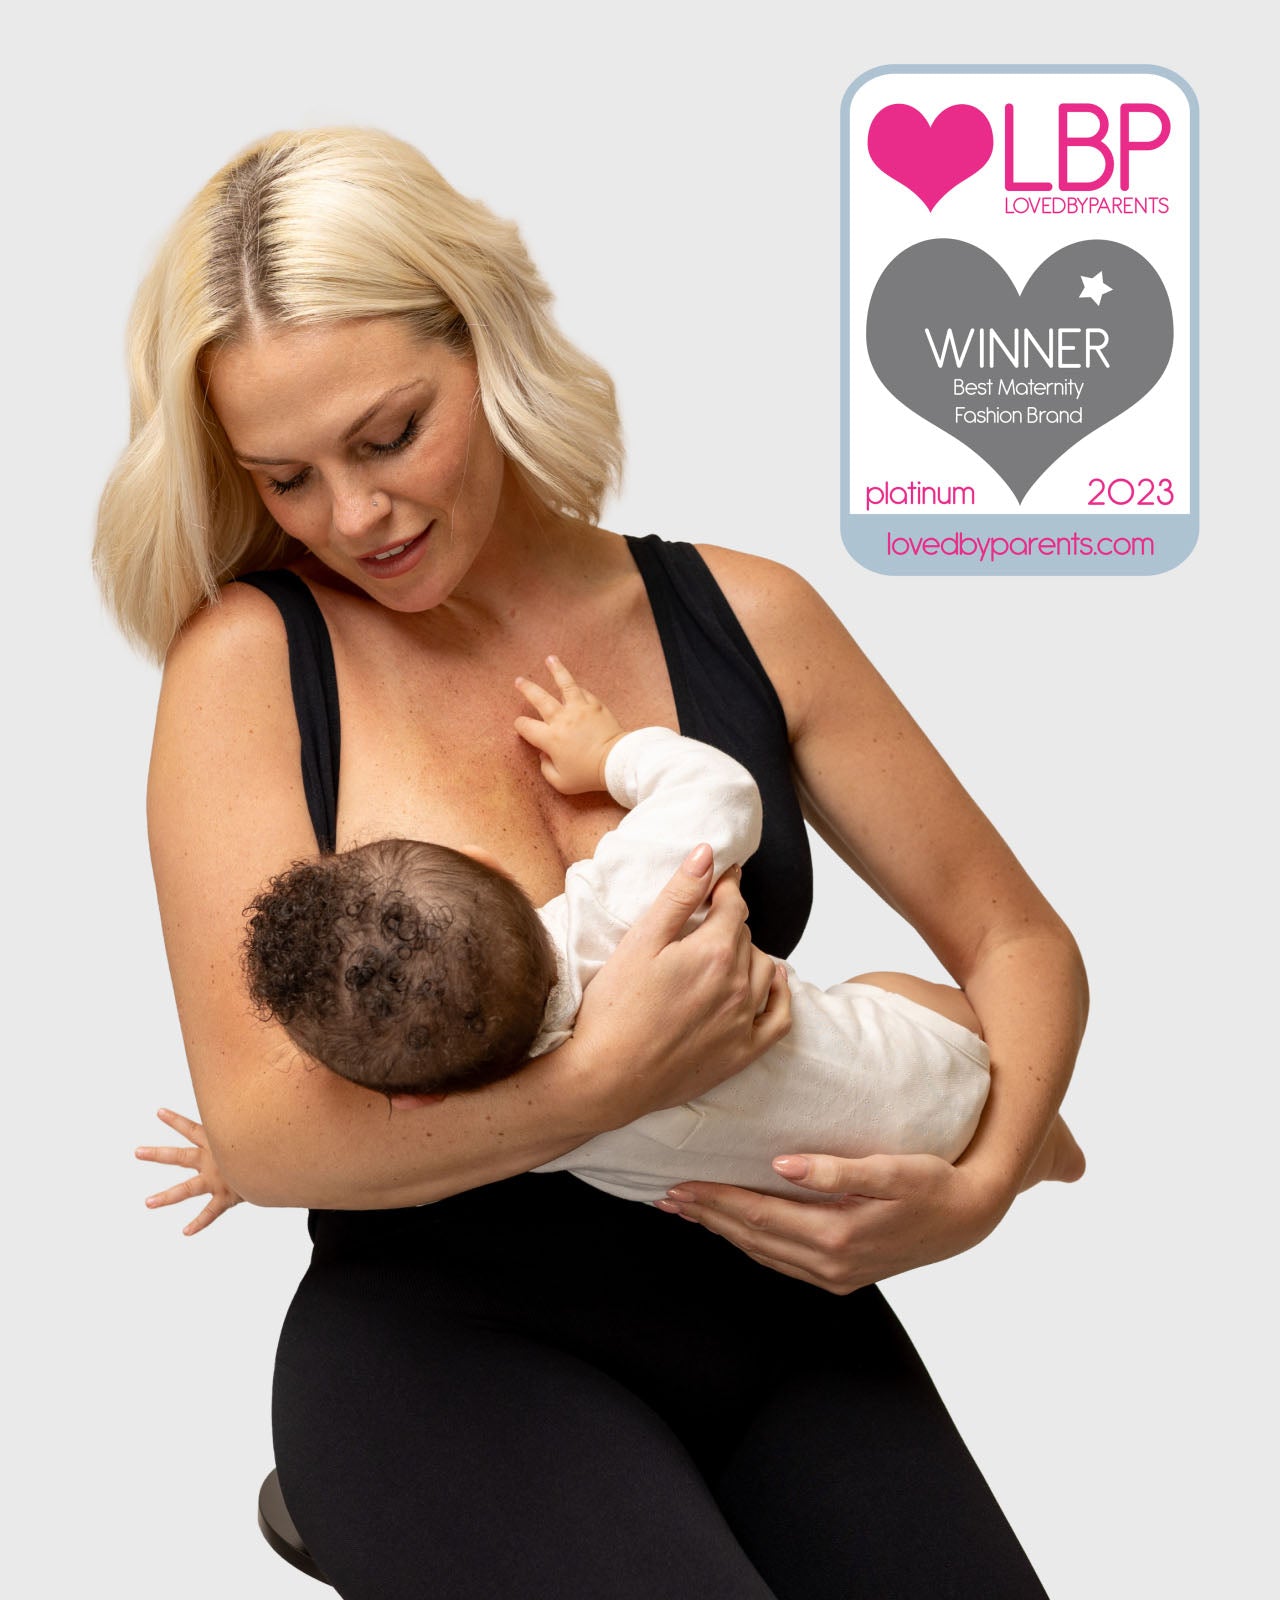 BABYGO Sleep Bra for Nursing, Breastfeeding; Super Soft, Seamless